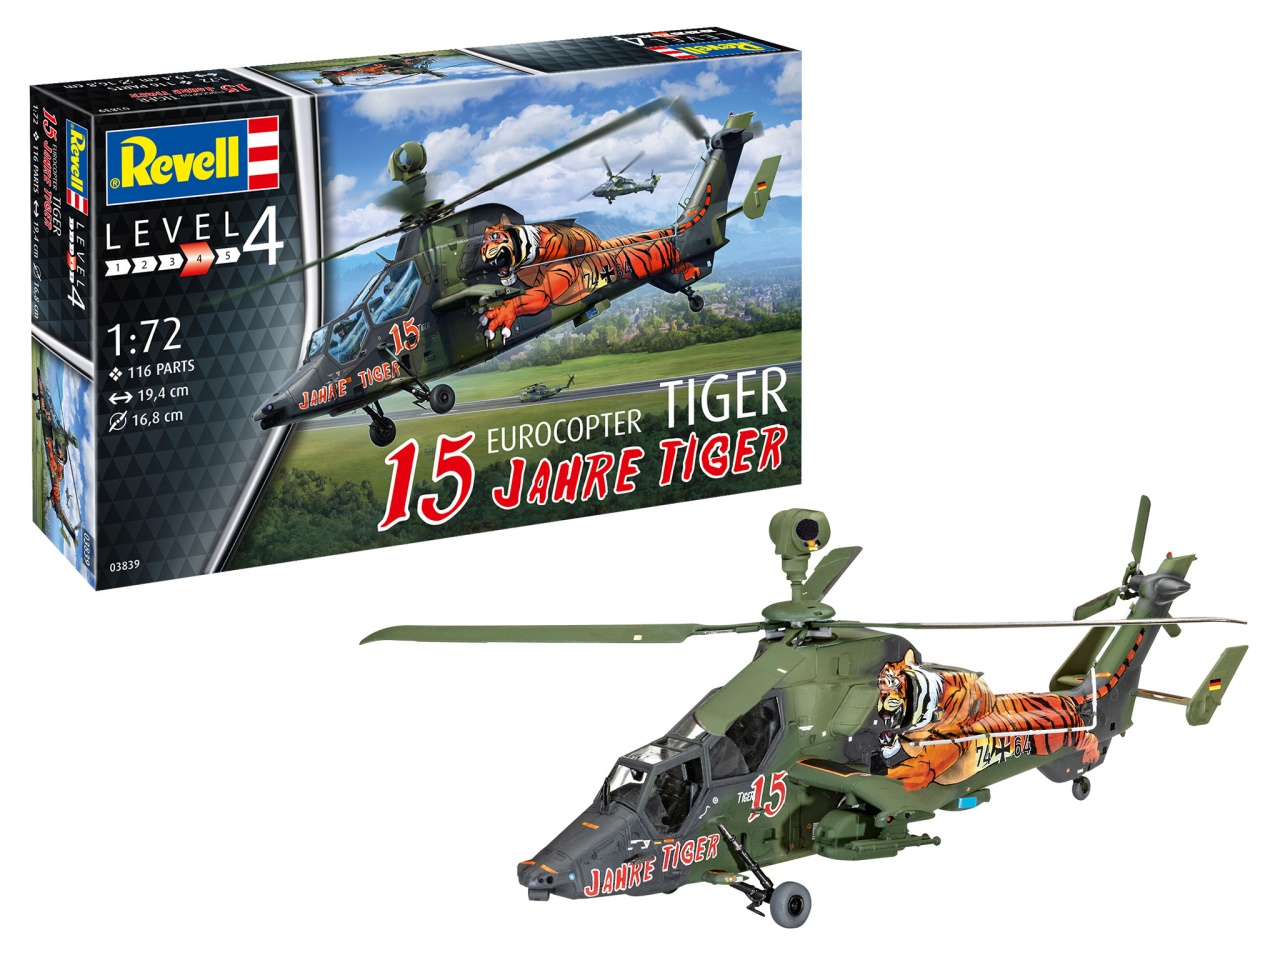 Eurocopter Tiger 15 Jahre Tiger, 03839